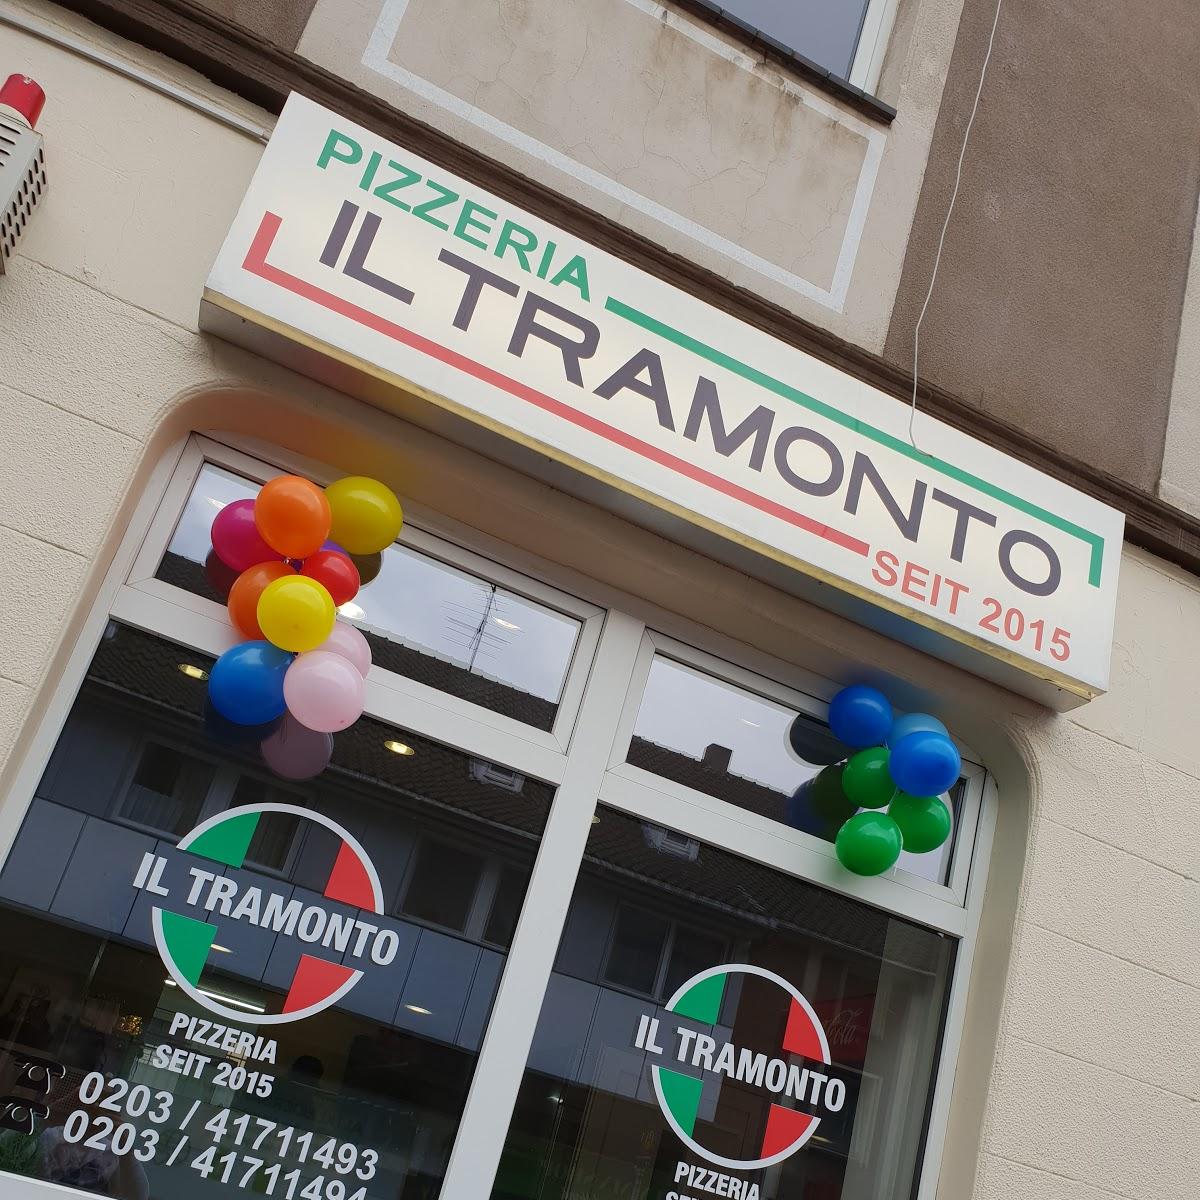 Restaurant "Il Tramonto" in Duisburg